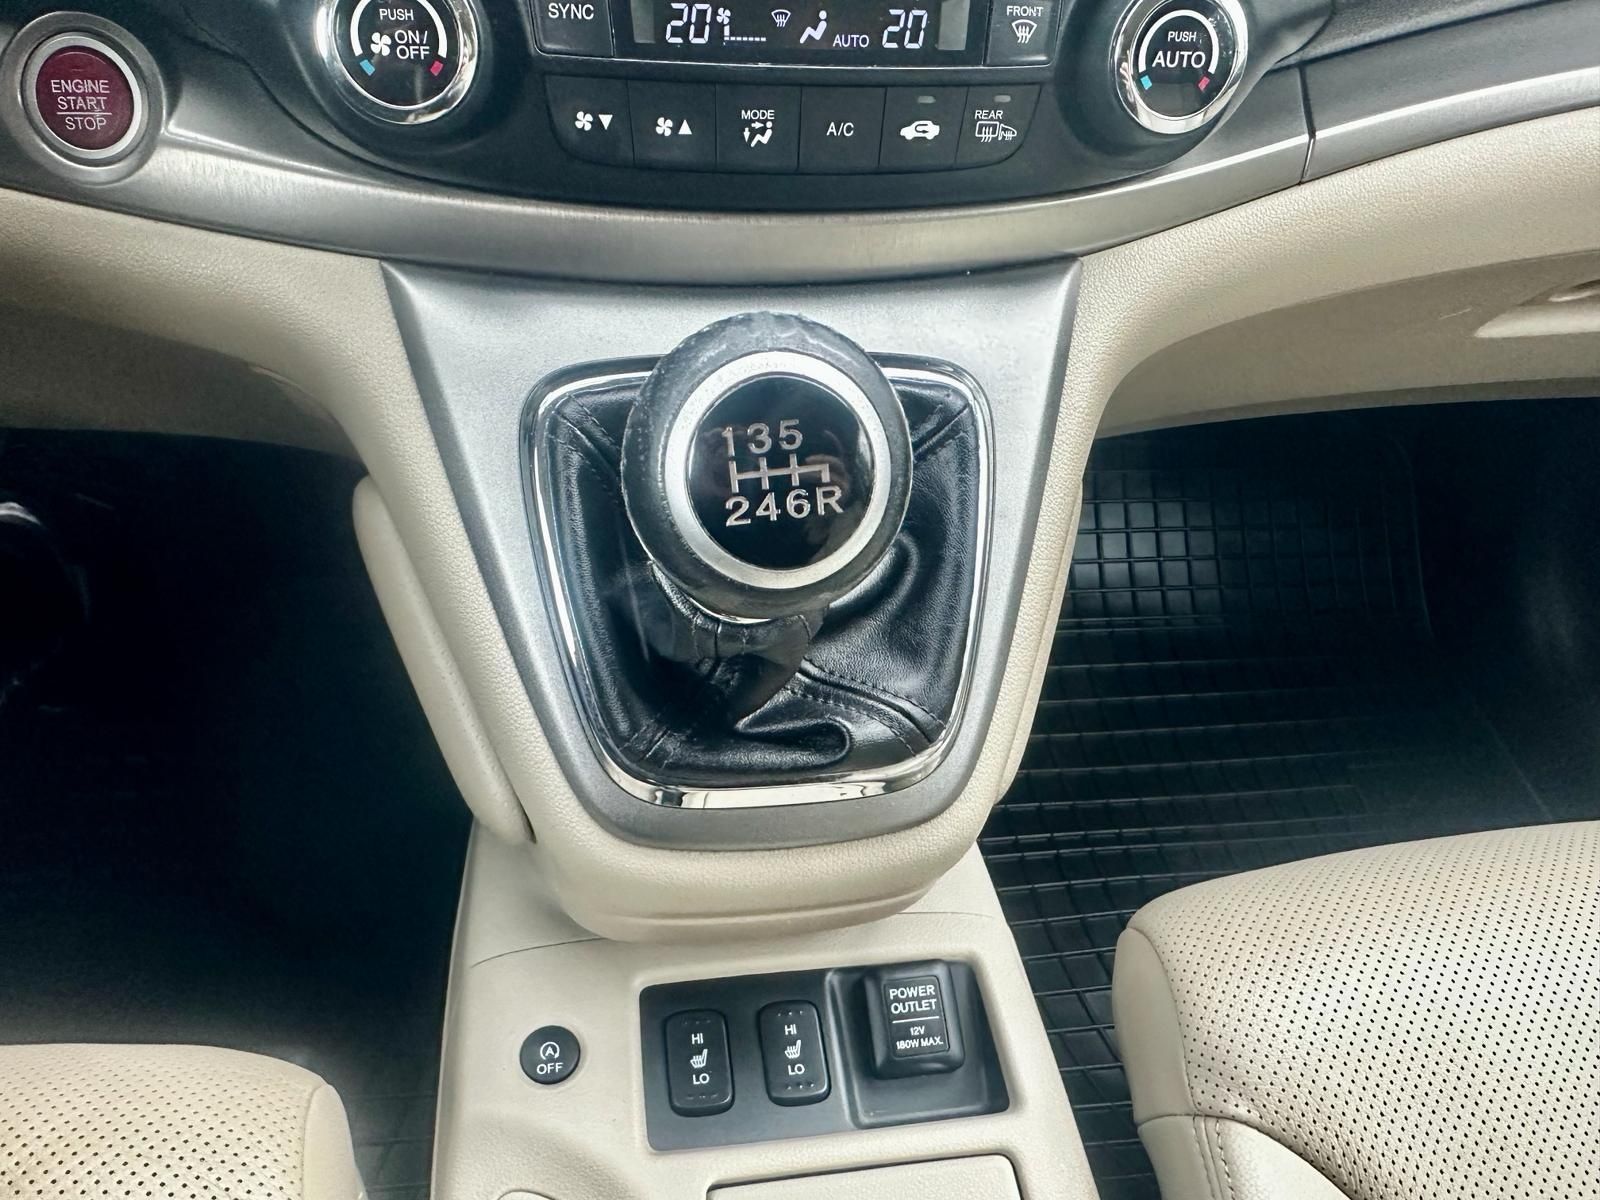 Honda CR-V 4X4 panorama bogate wyposazenie